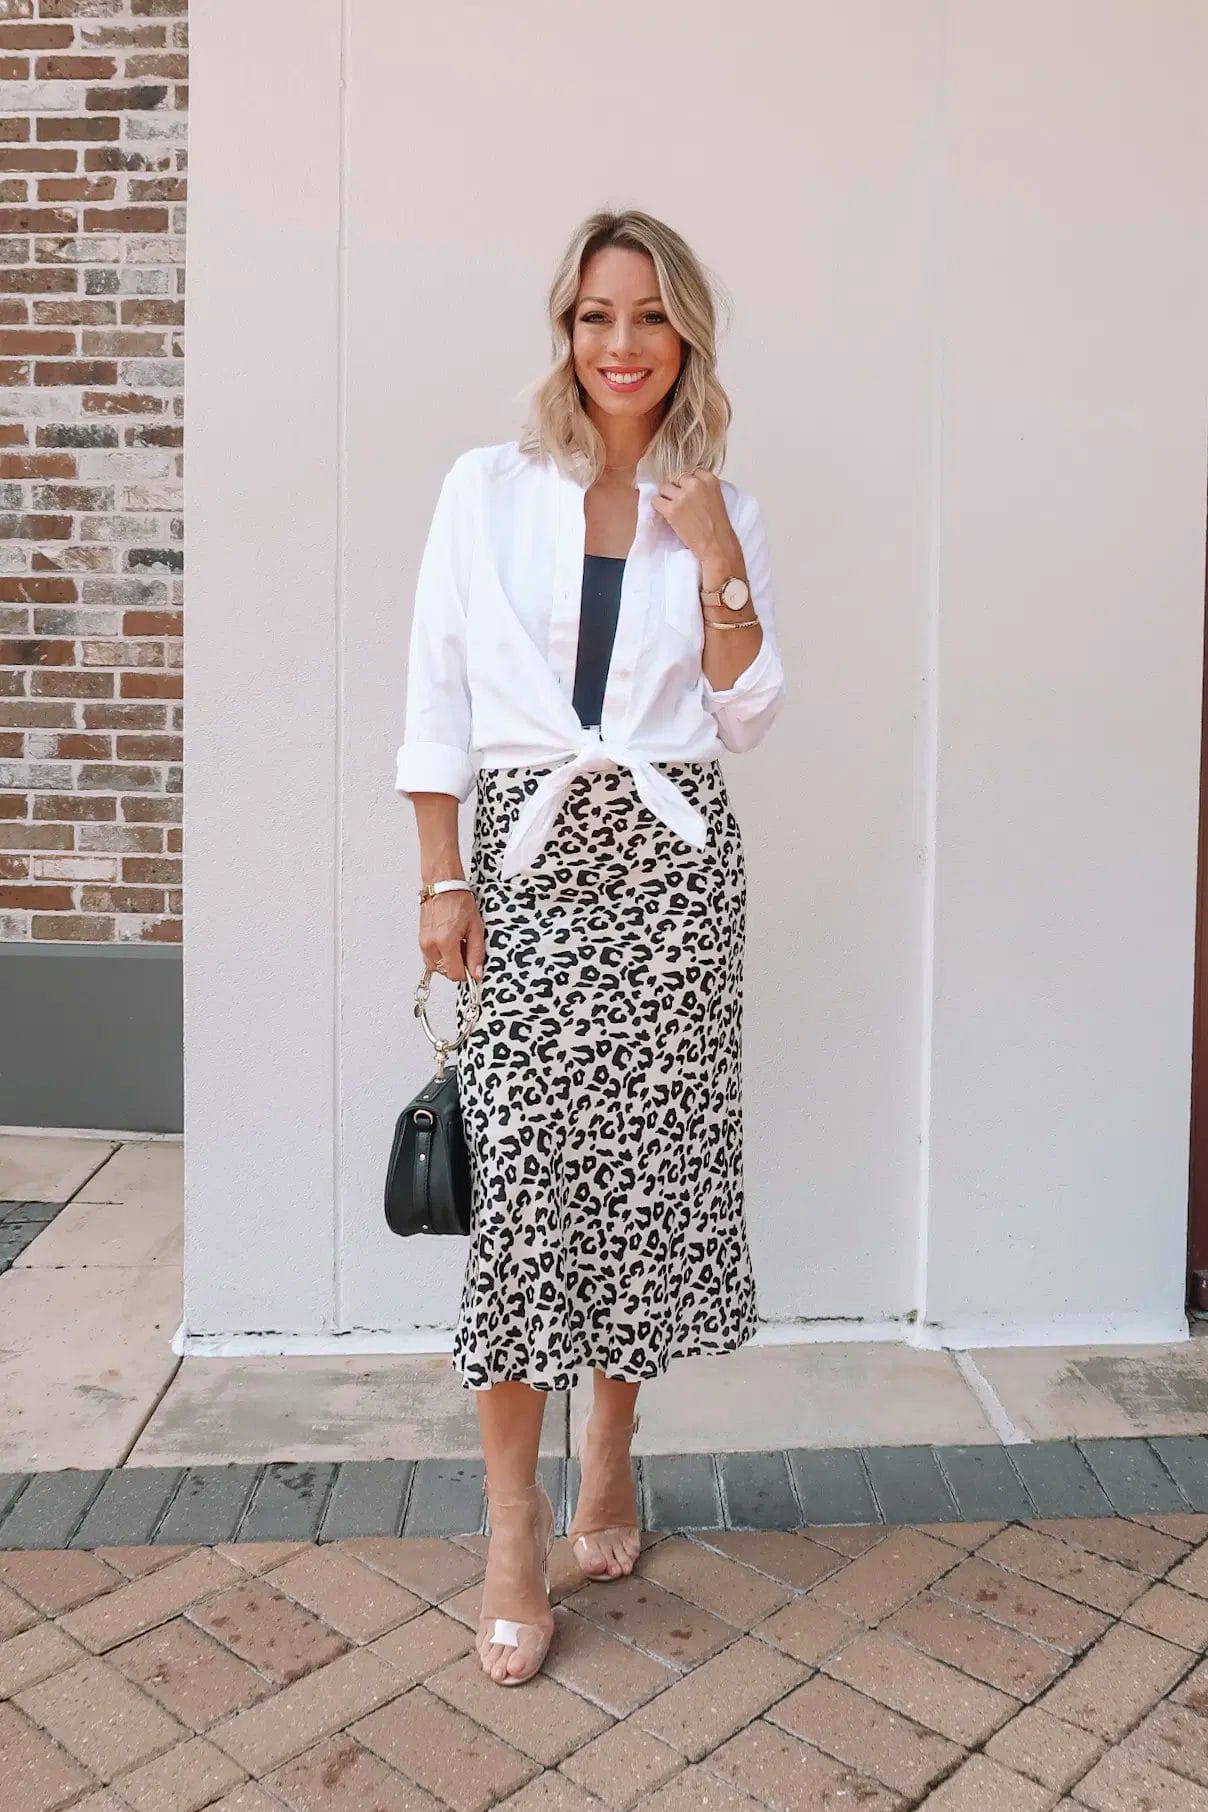 Leopard Skirt – Work, Weekend, Wow